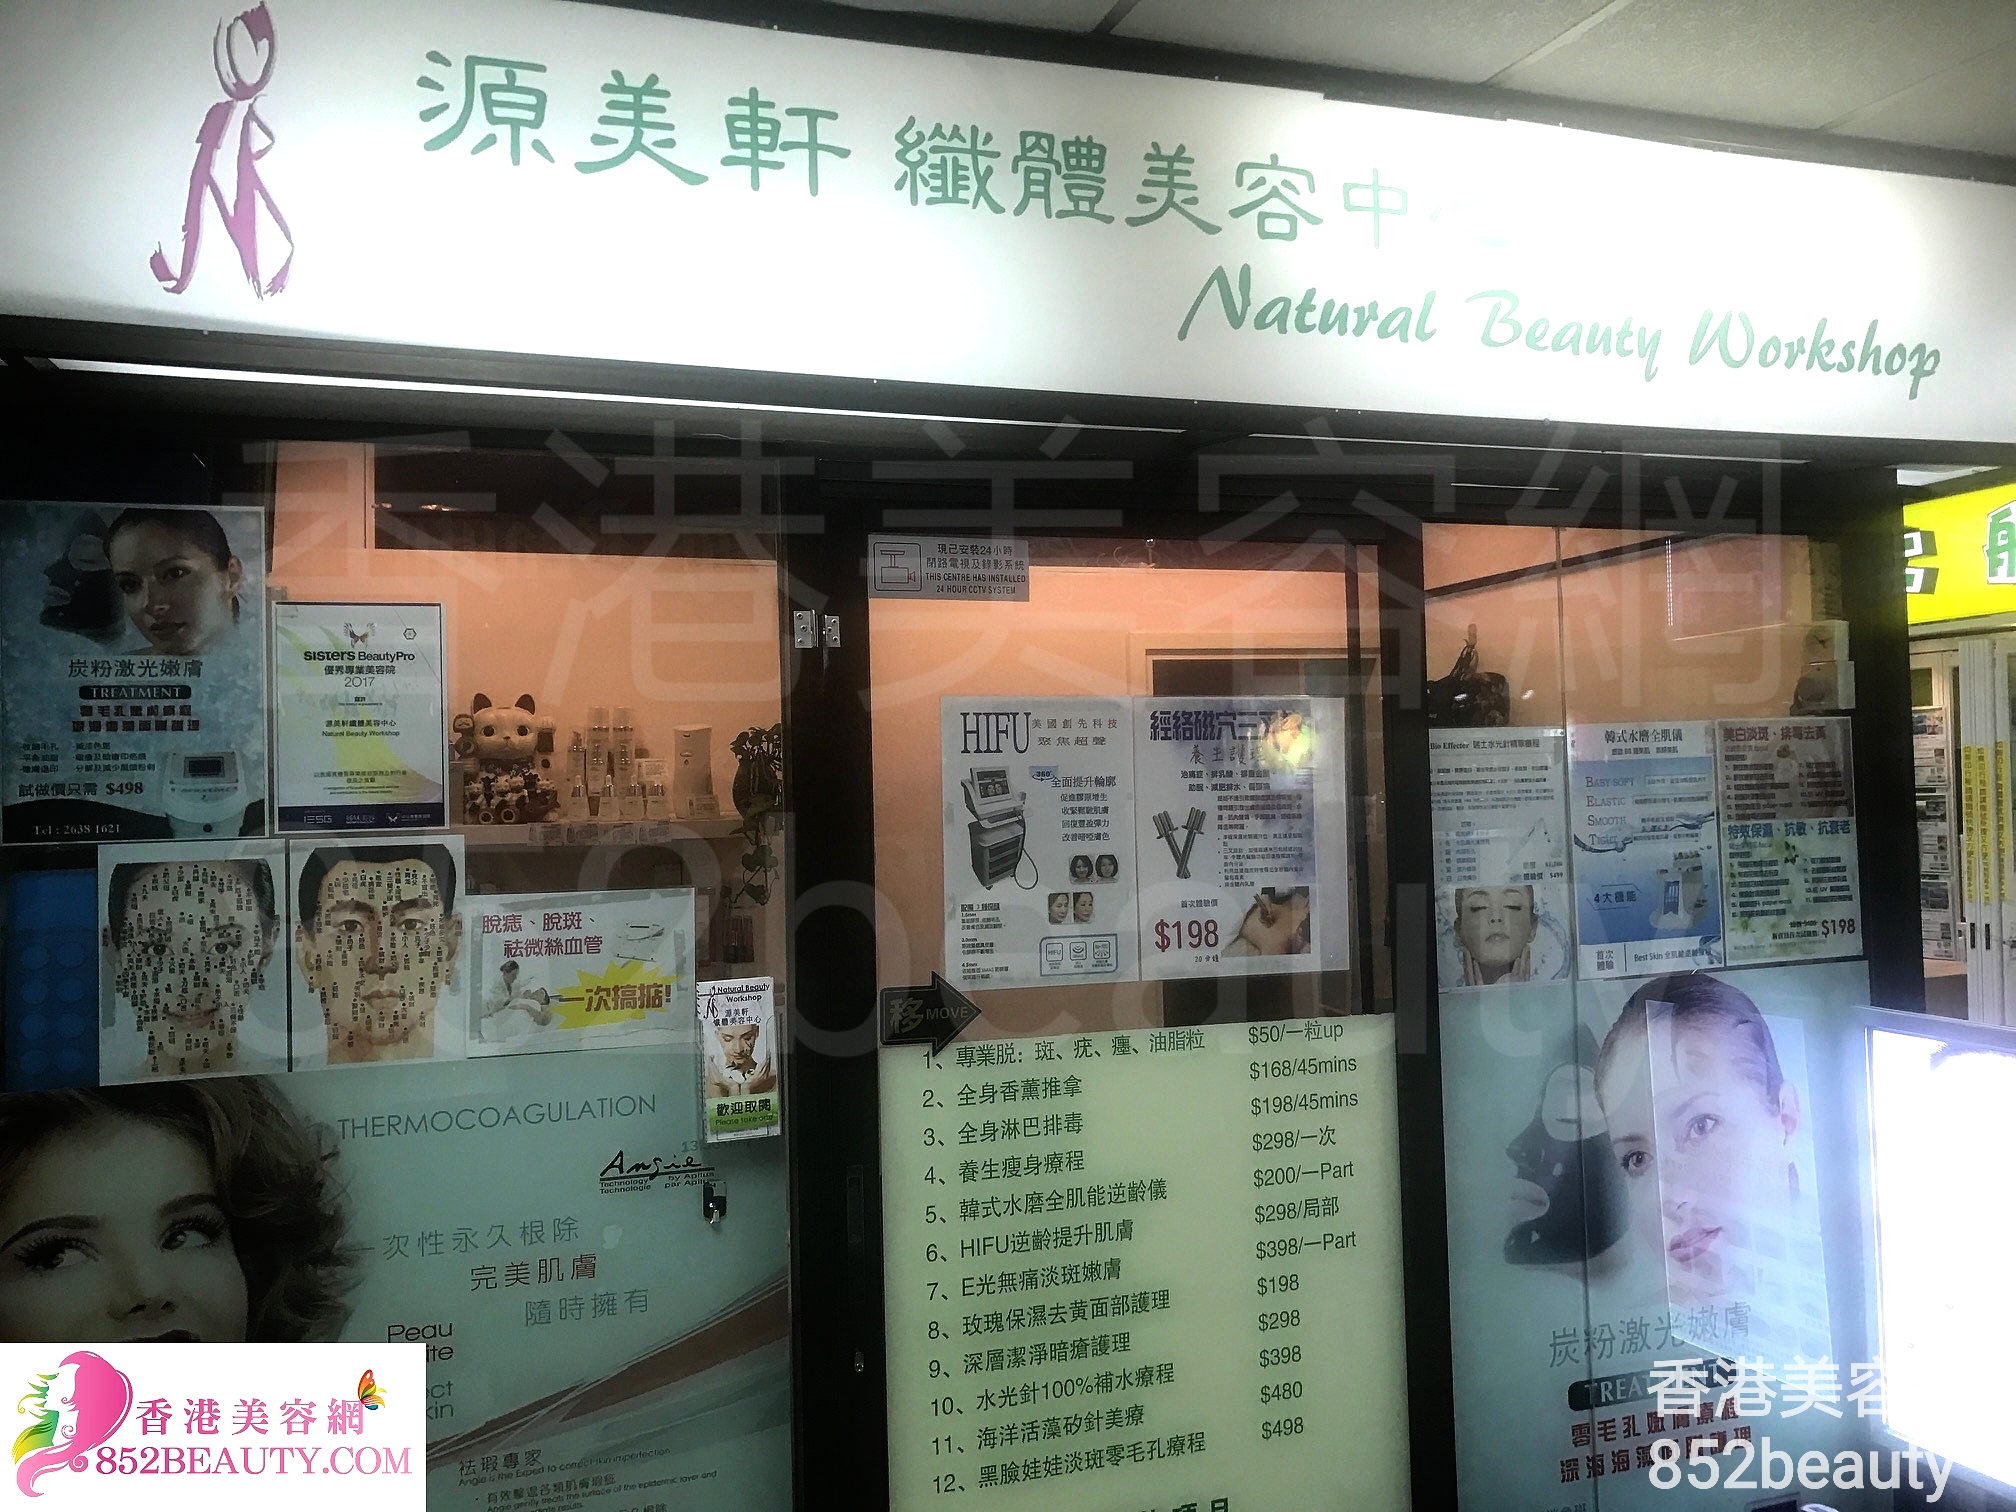 Facial Care: 源美軒纖體美容中心 Natural Beauty Workshop